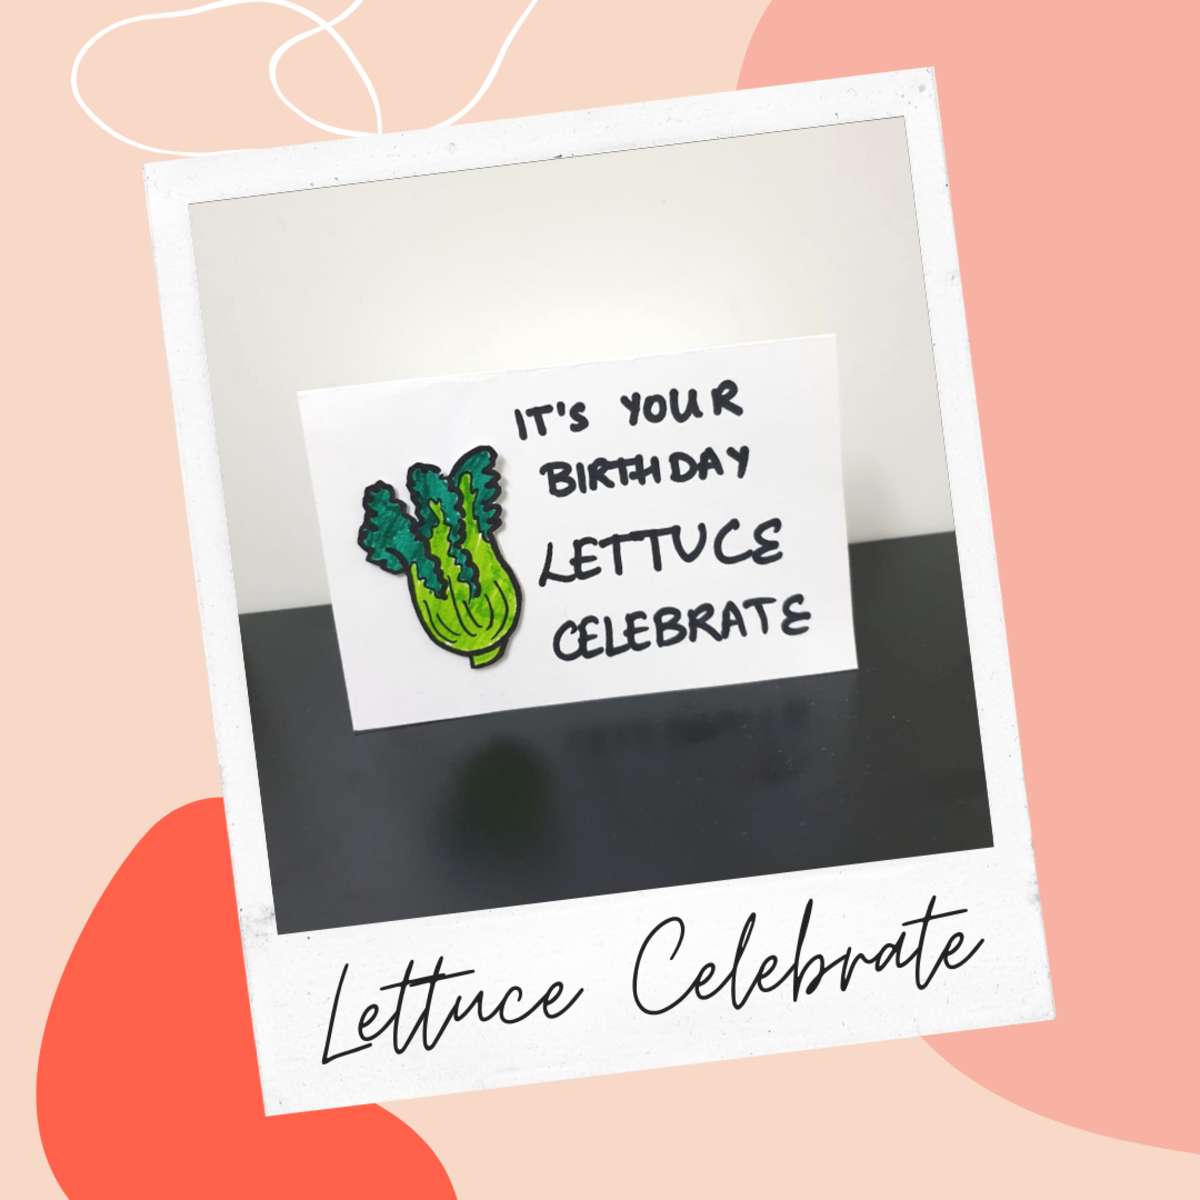 Lettuce Celebrate Birthday Greeting Card Idea